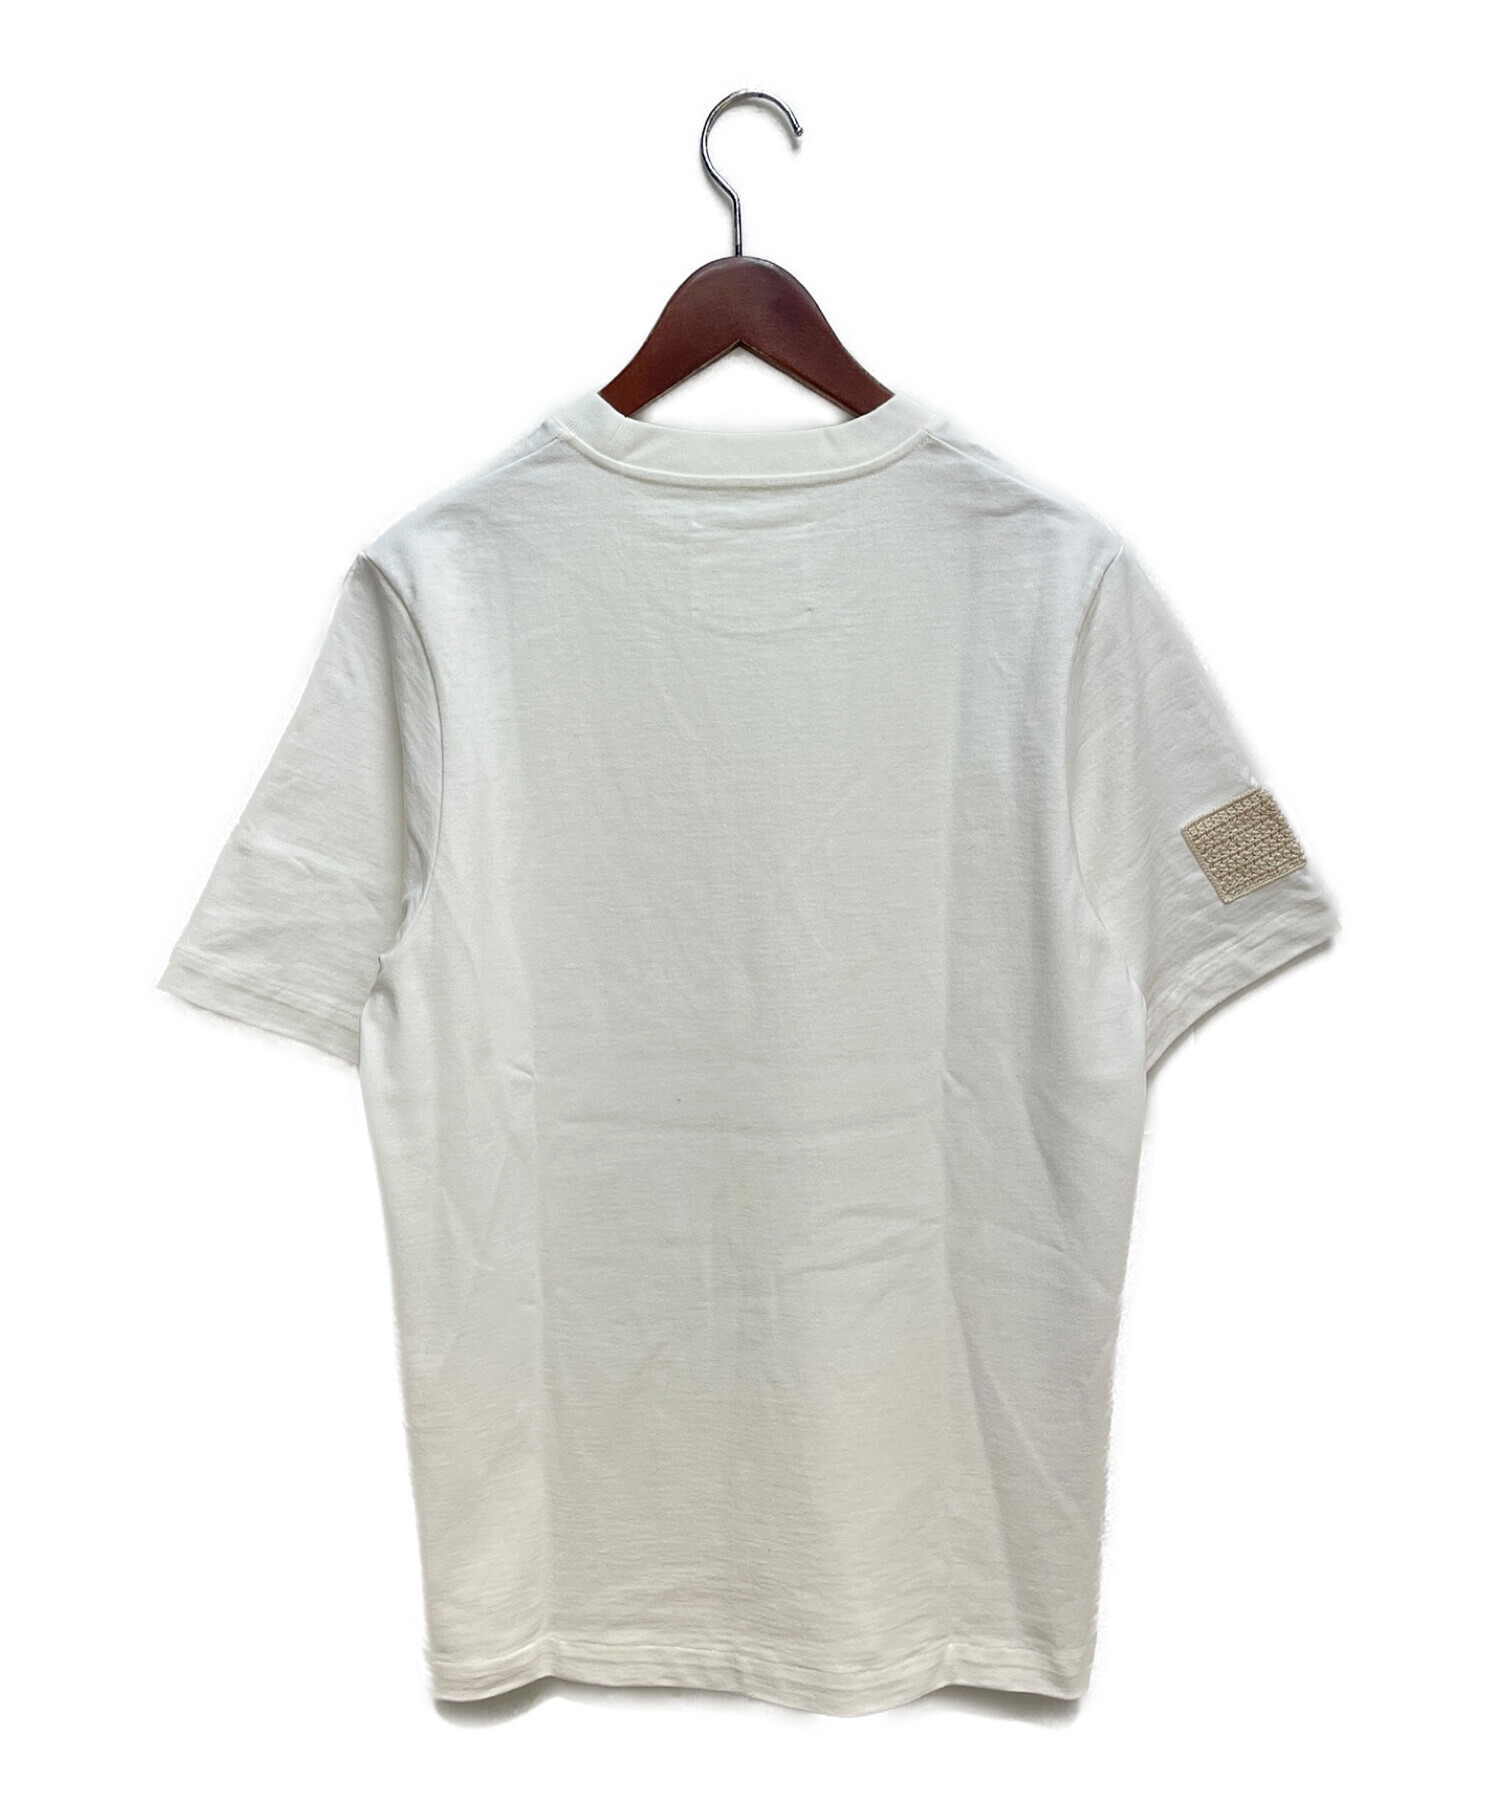 JIL SANDER (ジルサンダー) 21SS クロッシェパッチTシャツ ホワイト サイズ:M